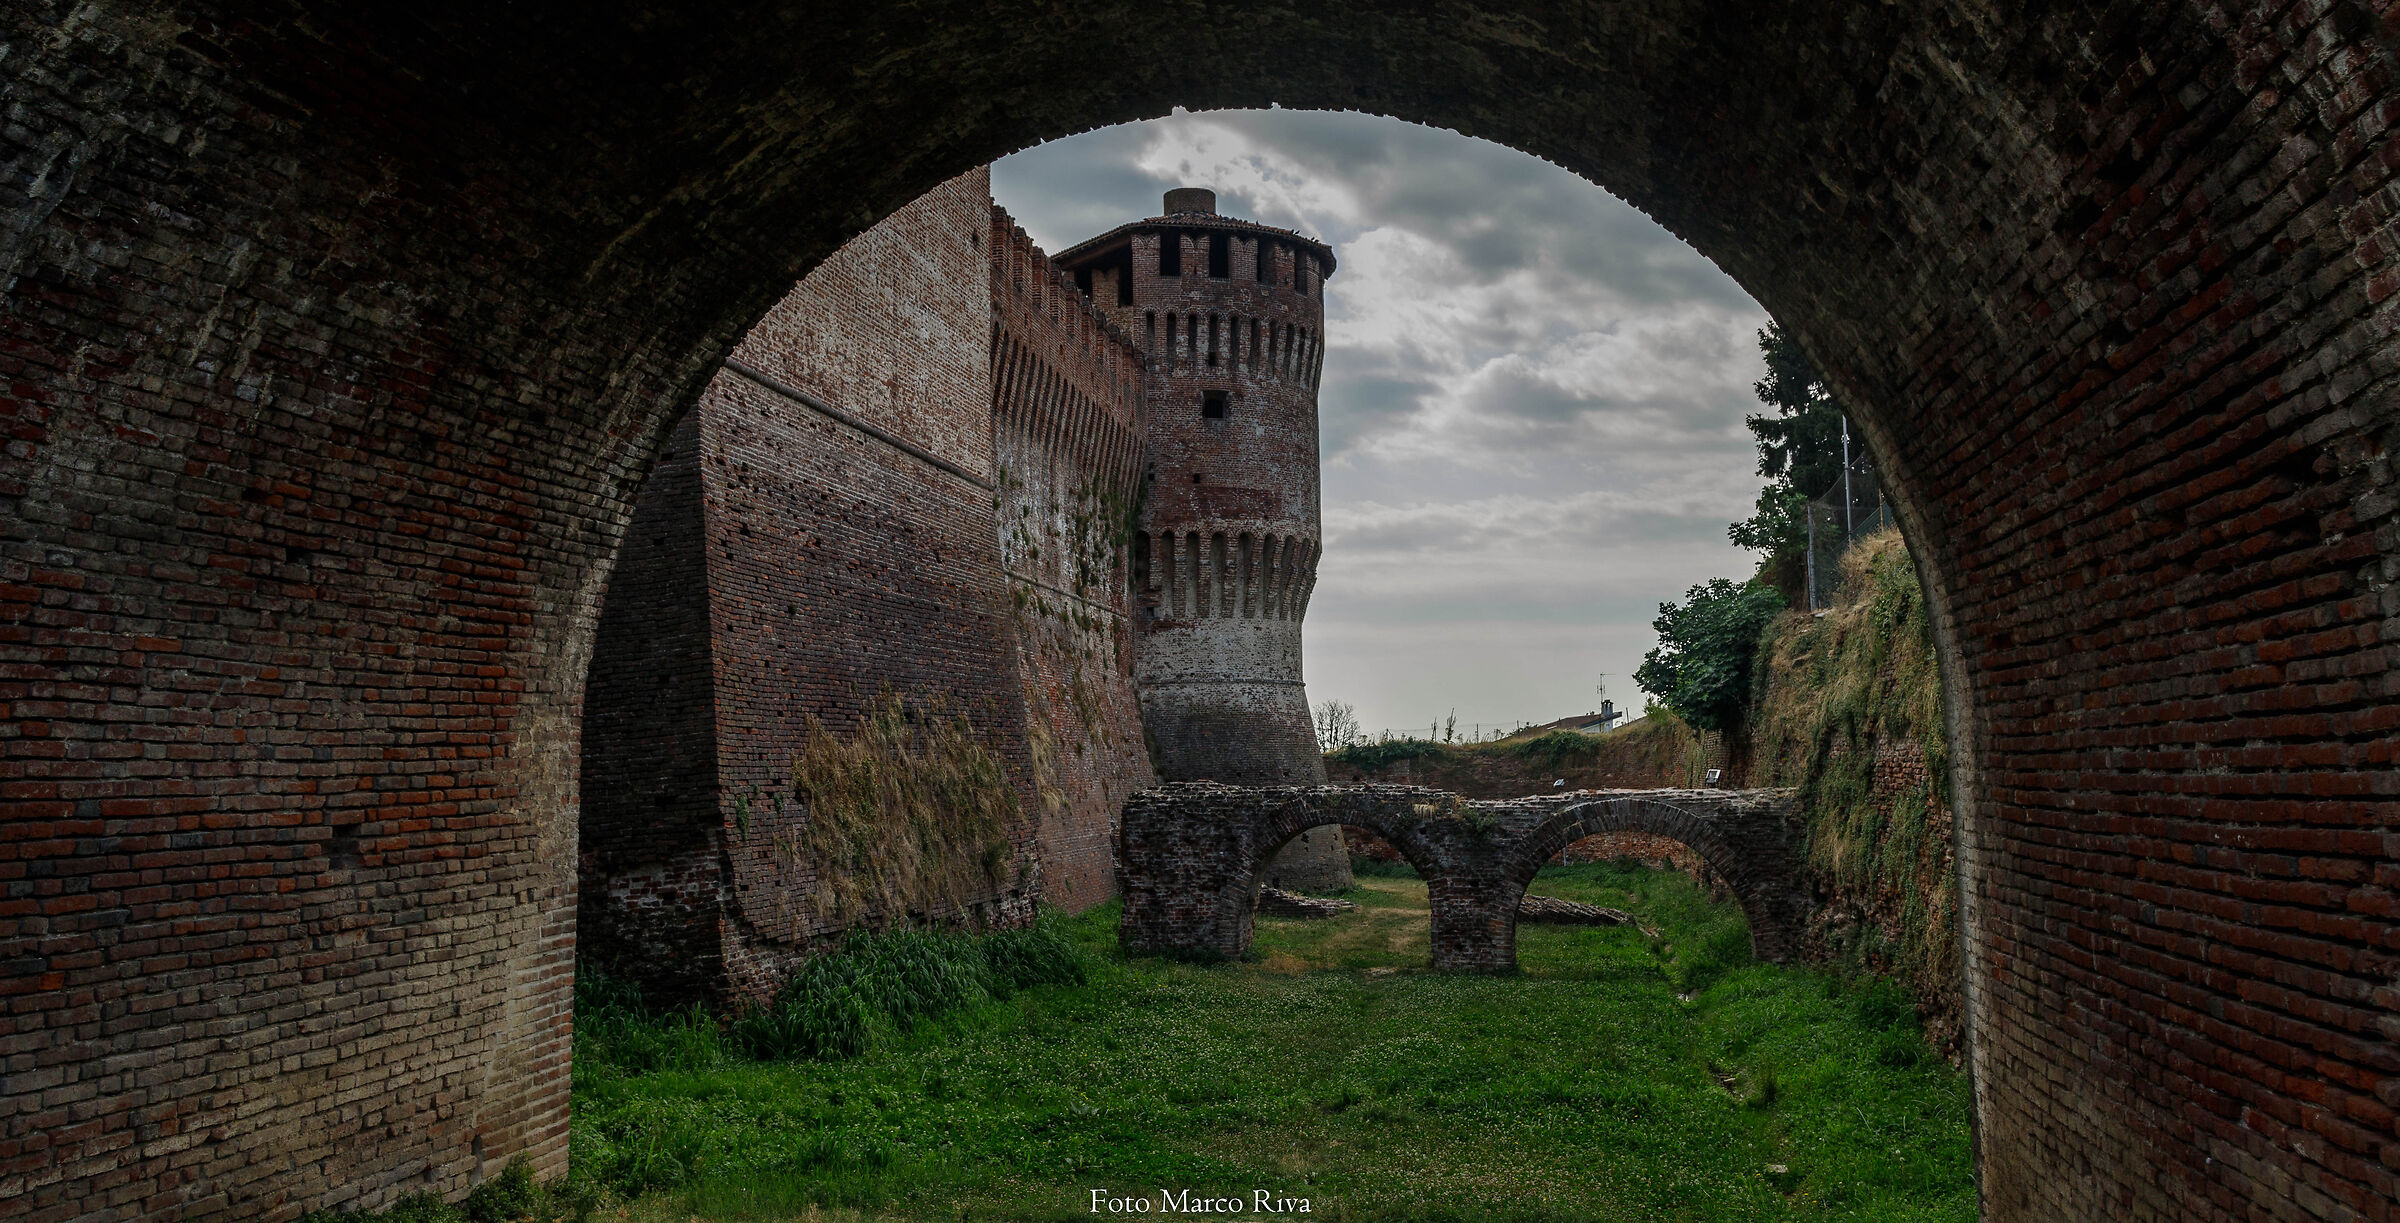 Sforza fortress of Soncino...